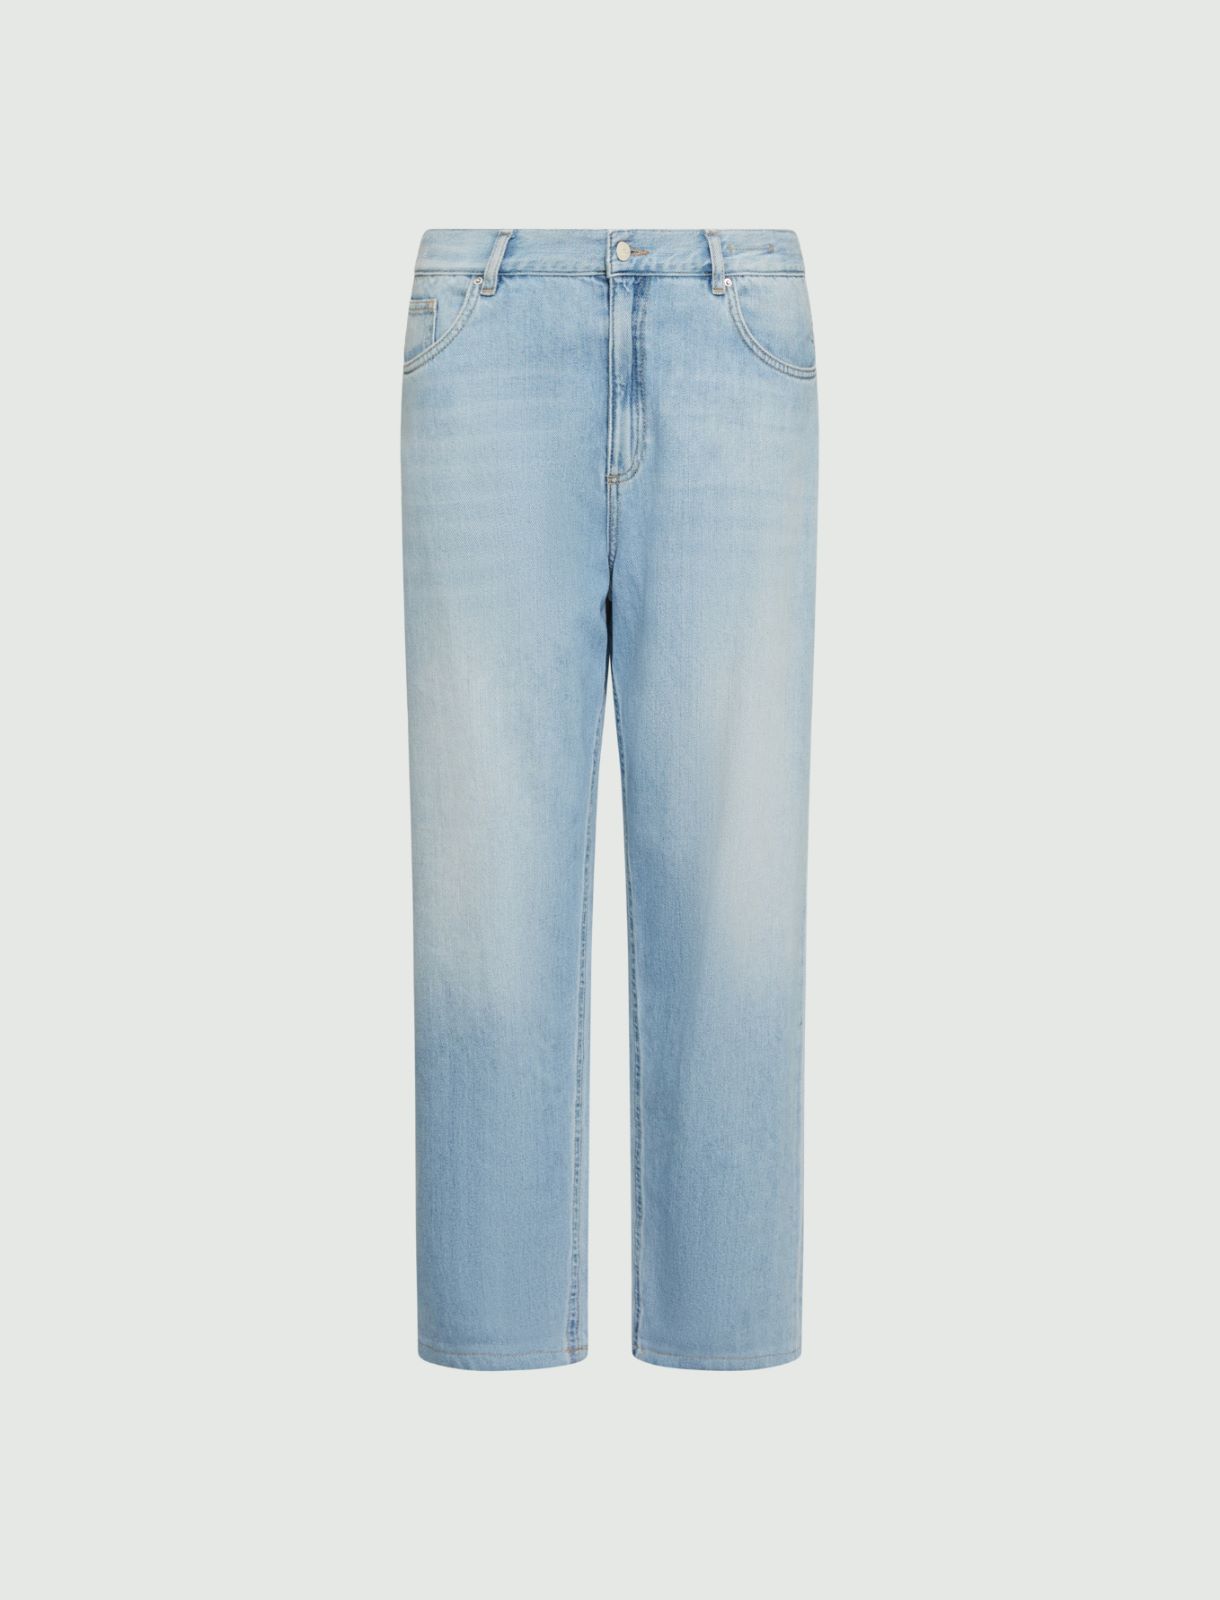 Jeans tom boy - Blue jeans - Marella